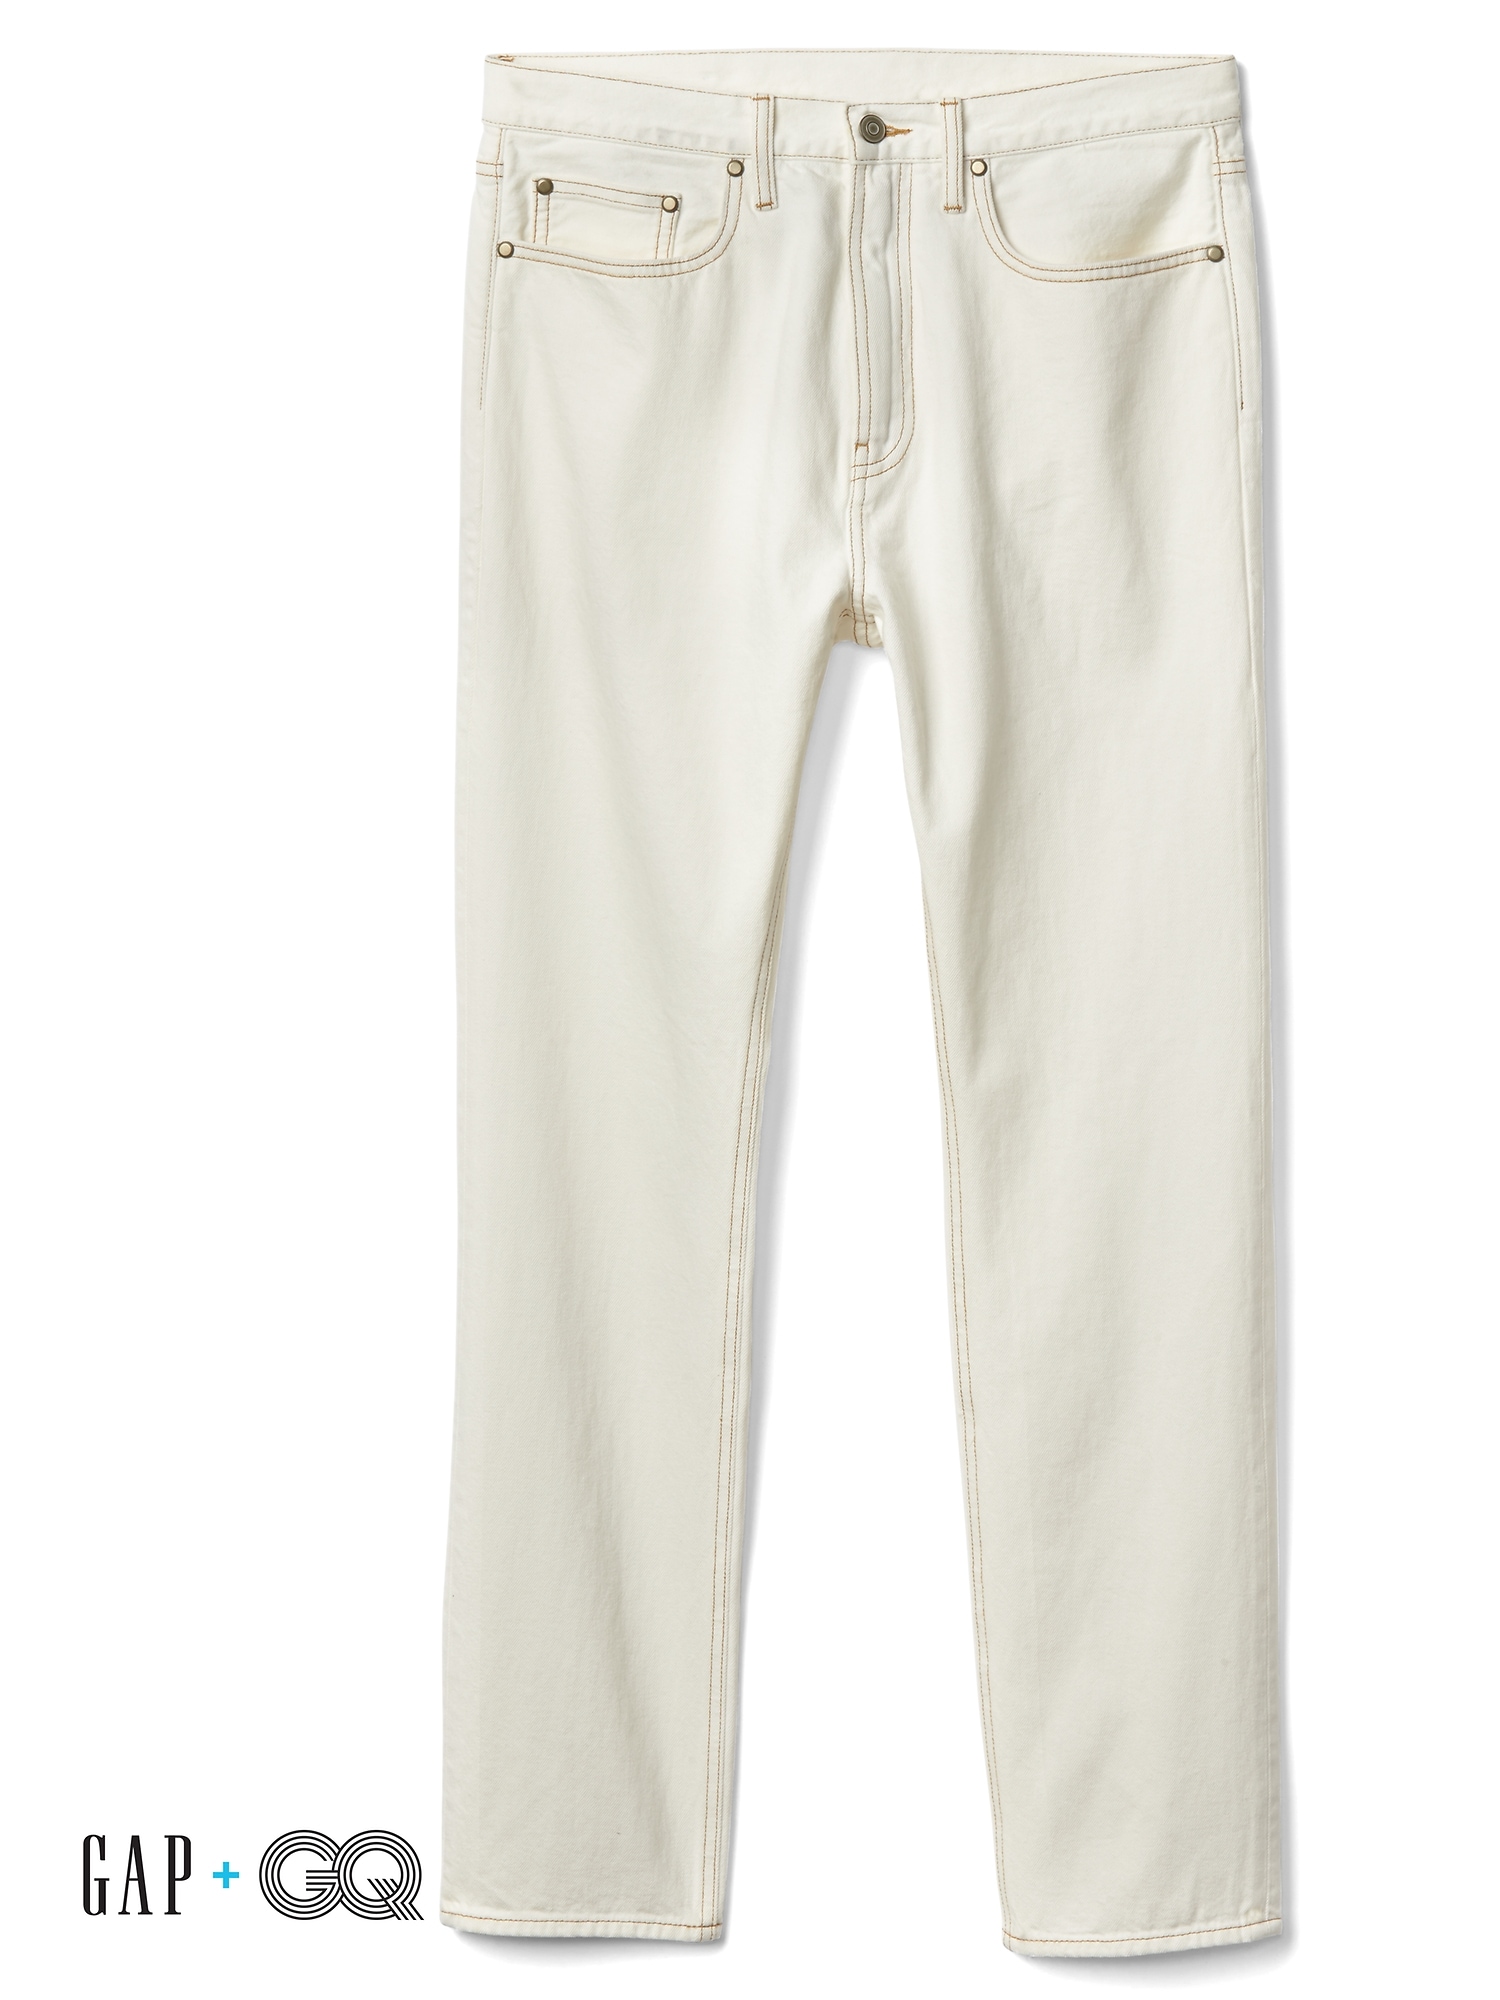 Gap + GQ Ami 5-pocket Gap | slim jeans fit